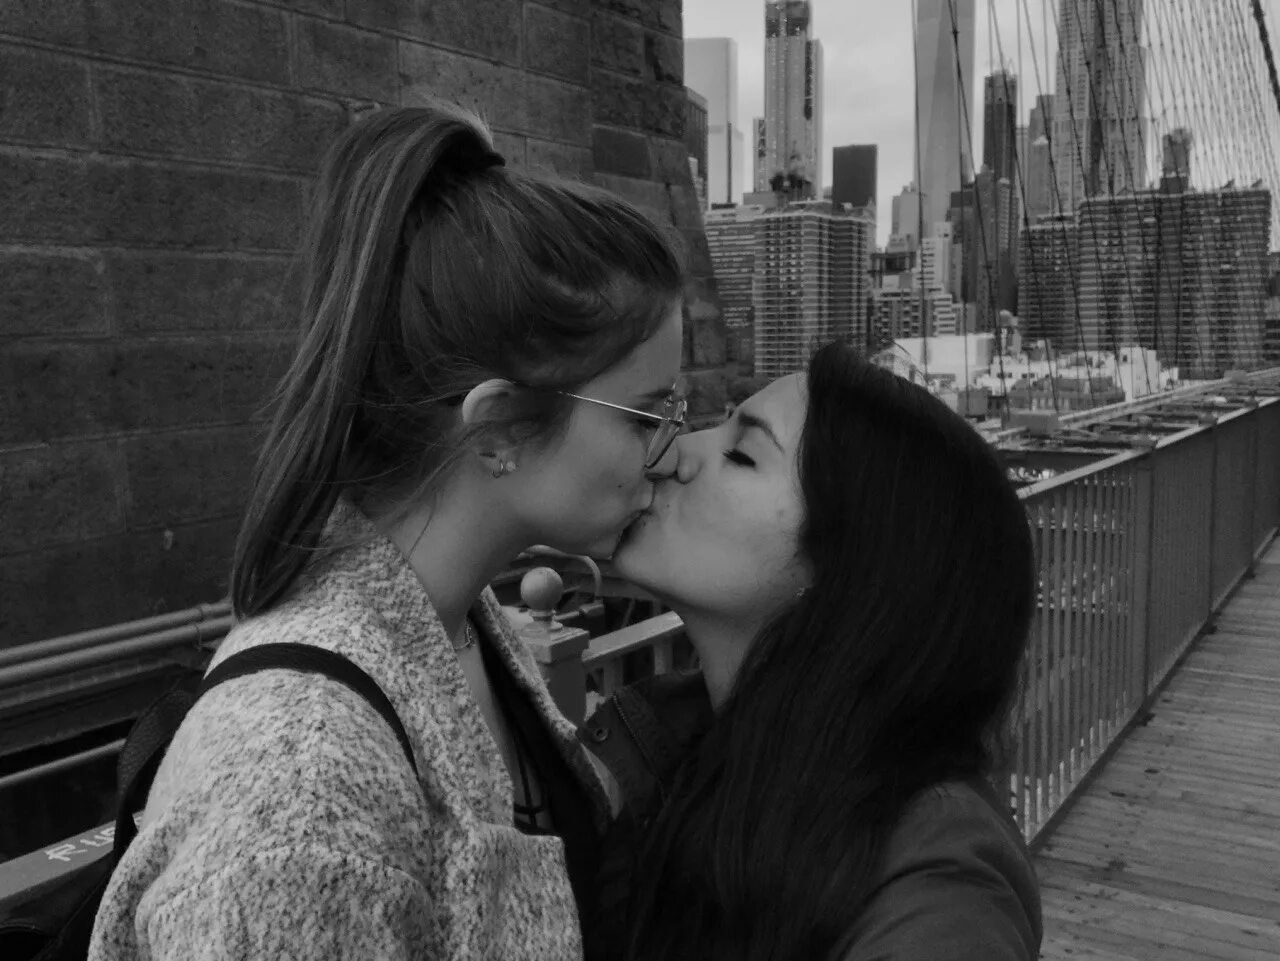 Lesbian g. Поцелуй девушек. Девушки целуются. Поцелуй девушки с девушкой. Поцелуй двух девушек.